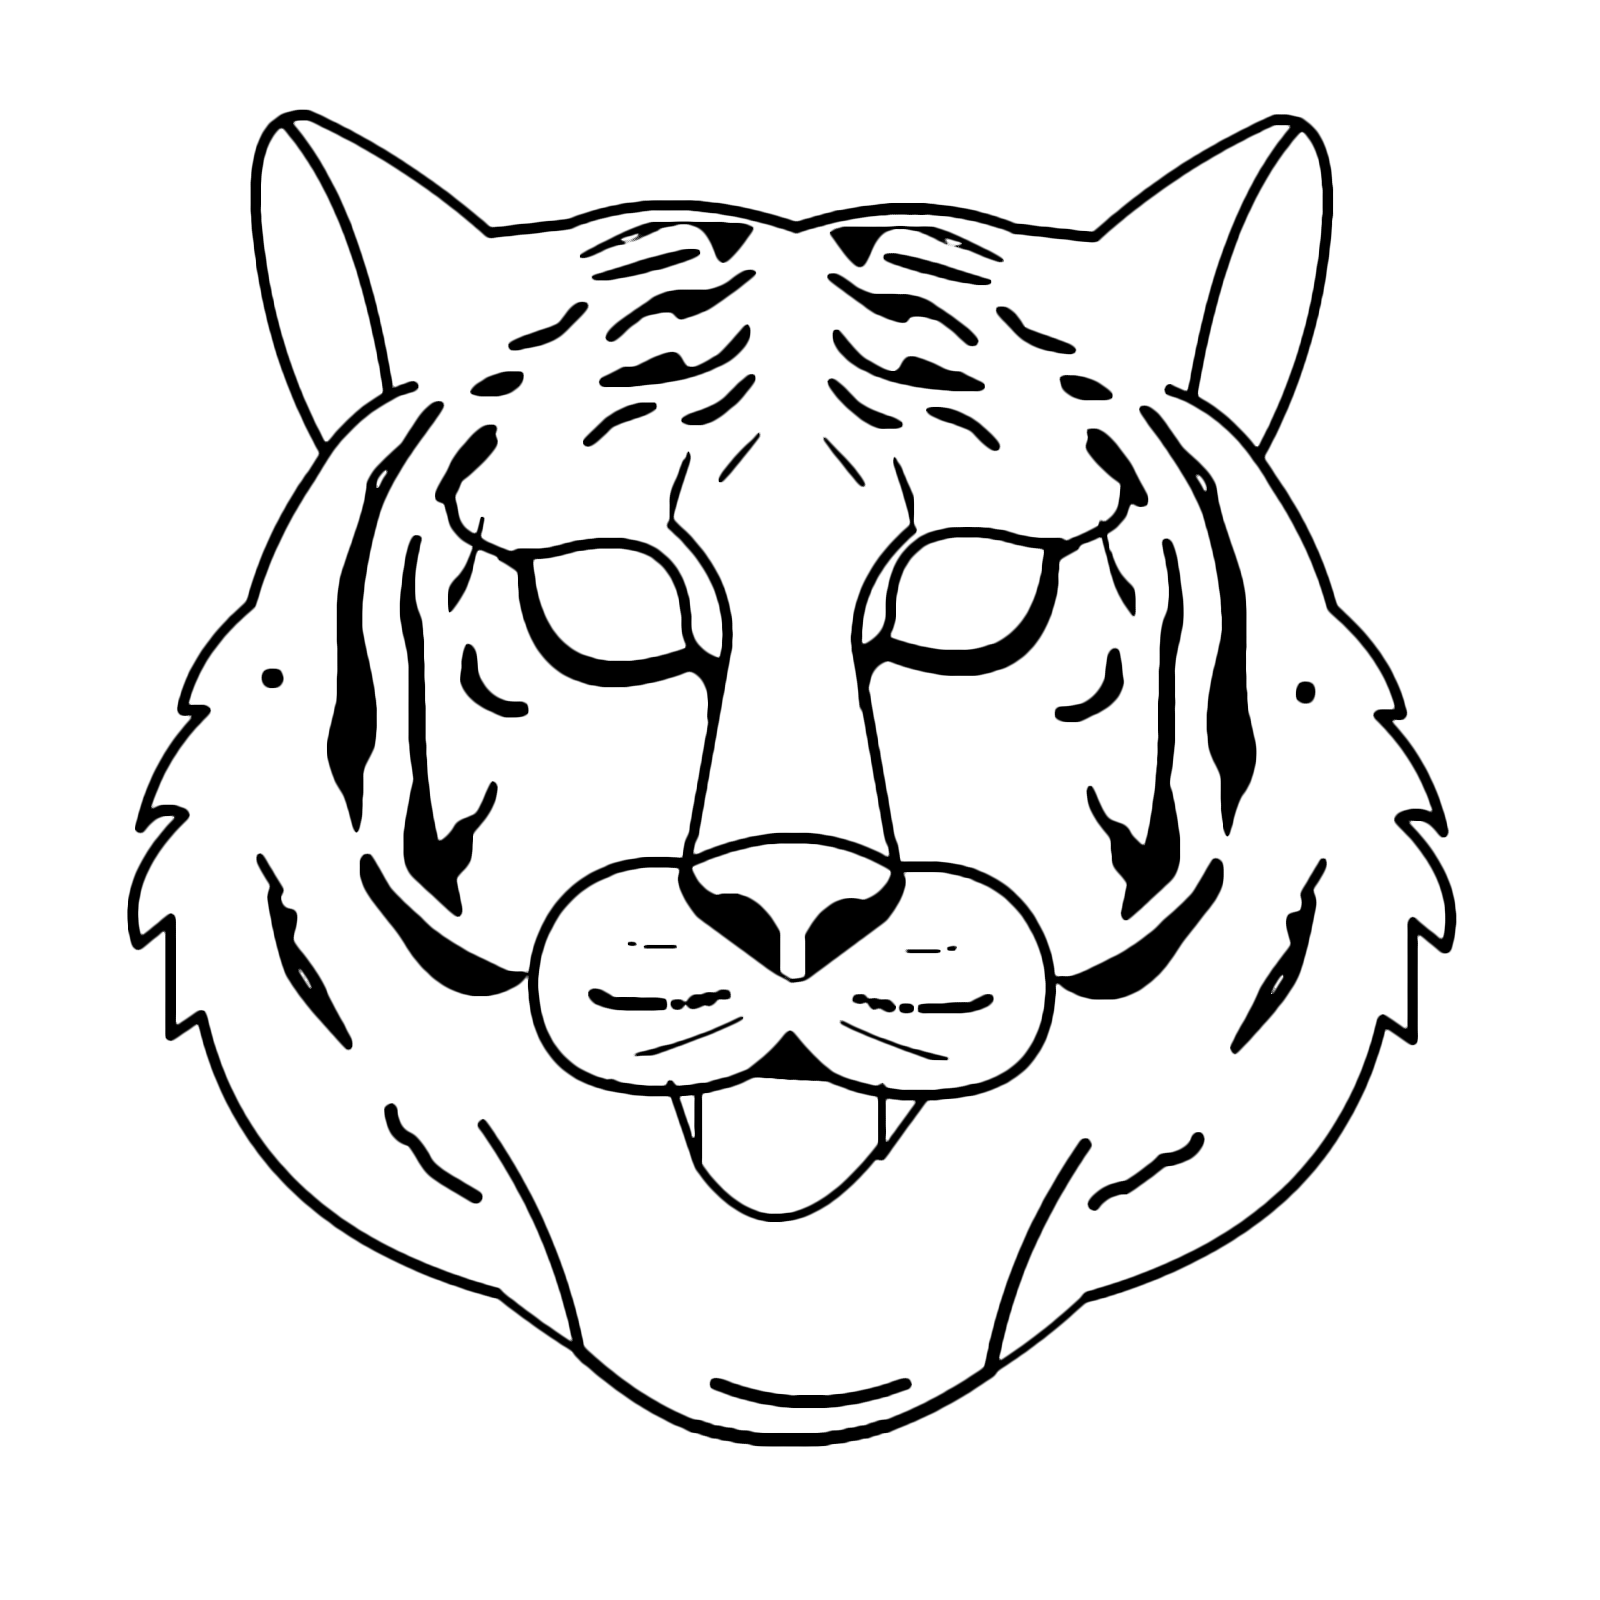 Маска тигра белая. Маска тигра для детей. Маска тигра для детей раскраска. Трафарет тигра для детей. Раскраски маски животных.